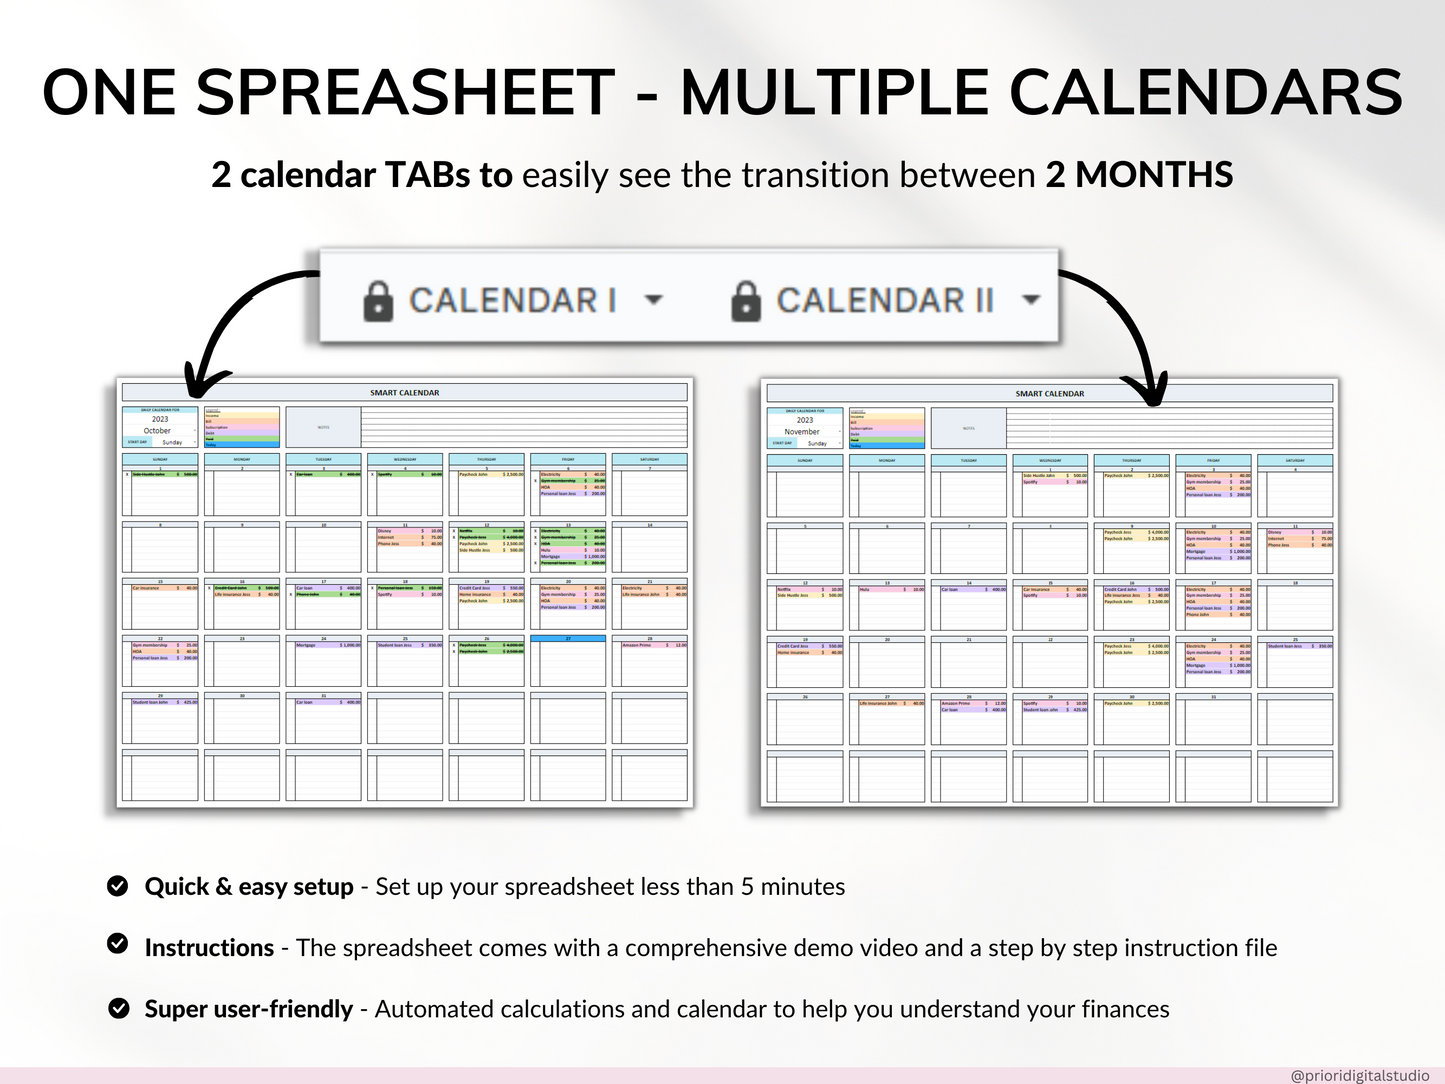 Bill Tracker Spreadsheet Google Sheets Excel Bill Calendar Monthly Smart Bill Planner Editable 2024 Calendar Personal Finance Budget Tracker